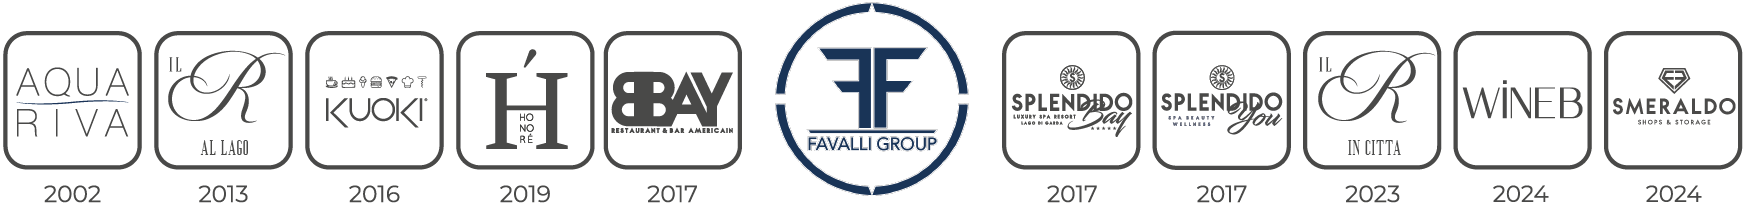 Favalli Group